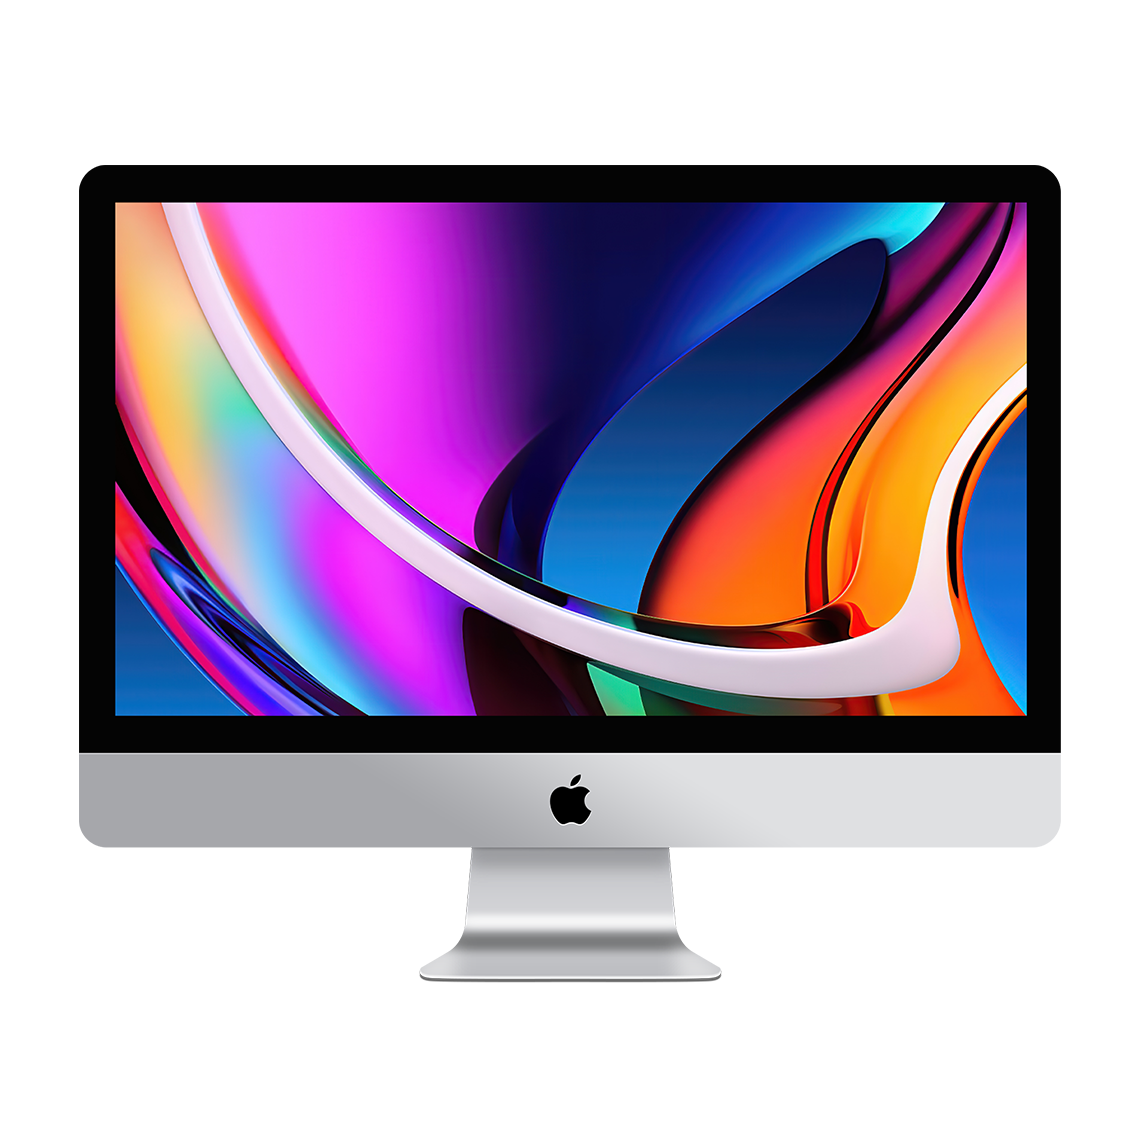 2020 iMac 27-inch 5K - Intel Core i9, 64GB, 512GB Flash, Radeon Pro 5300 4GB, Grade A